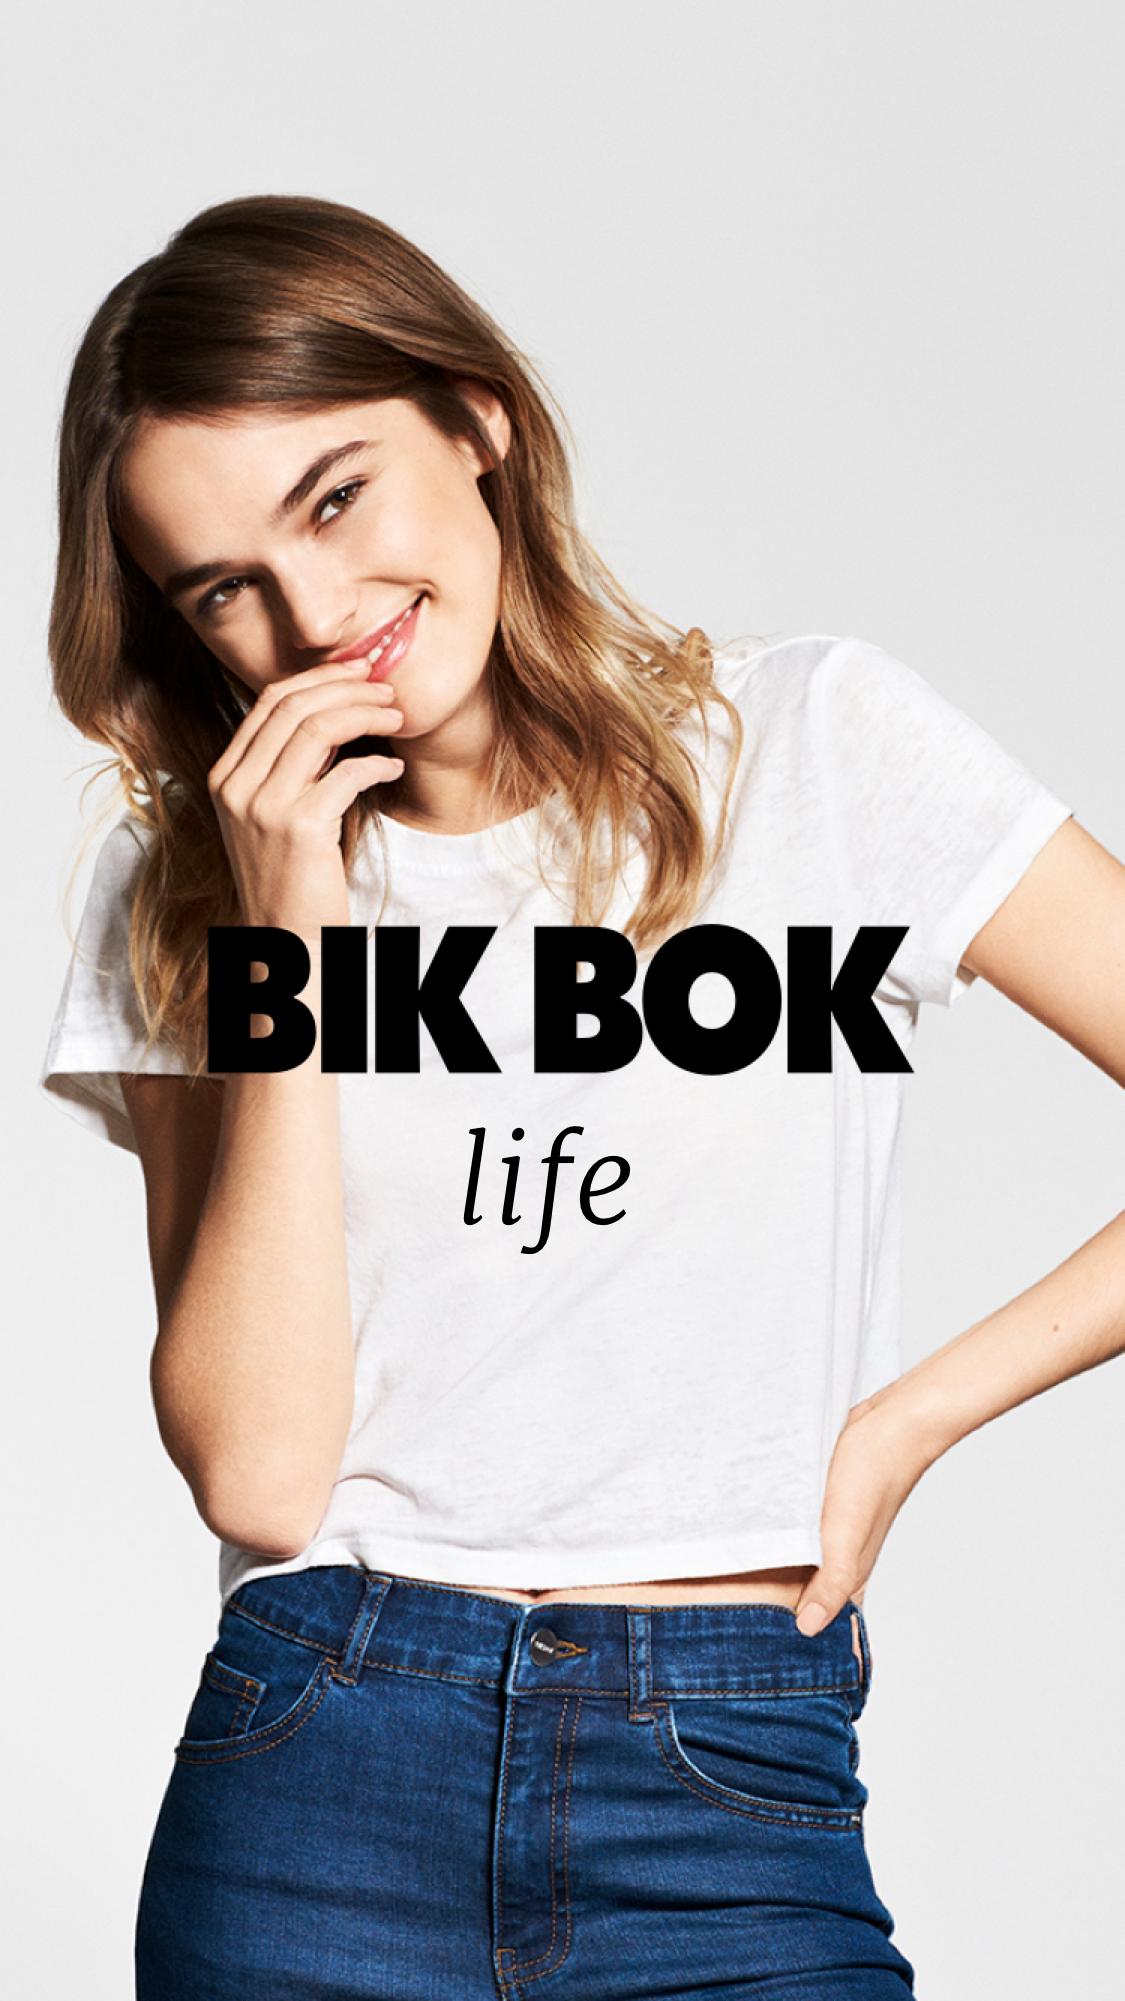 Bik Bok life for Android - APK Download